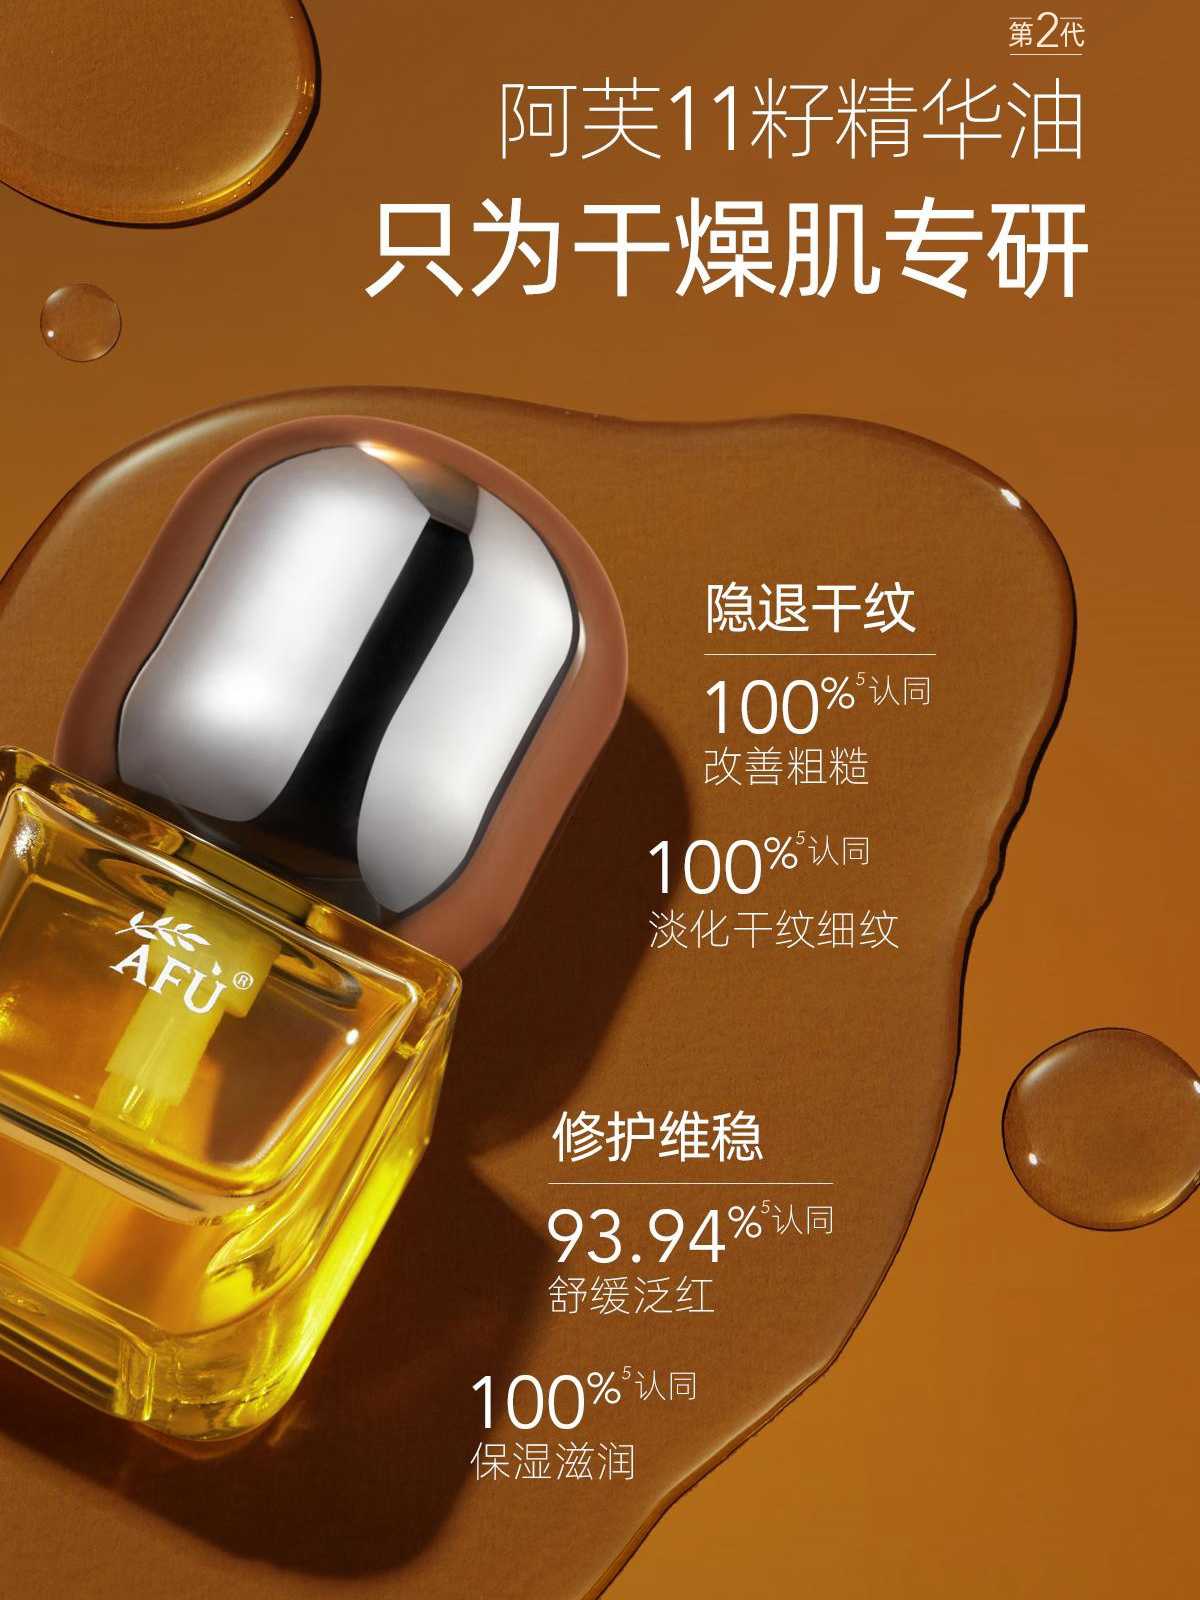 AFU 11 Seeds Essence Oil for Dry Skin Anti Aging AF001